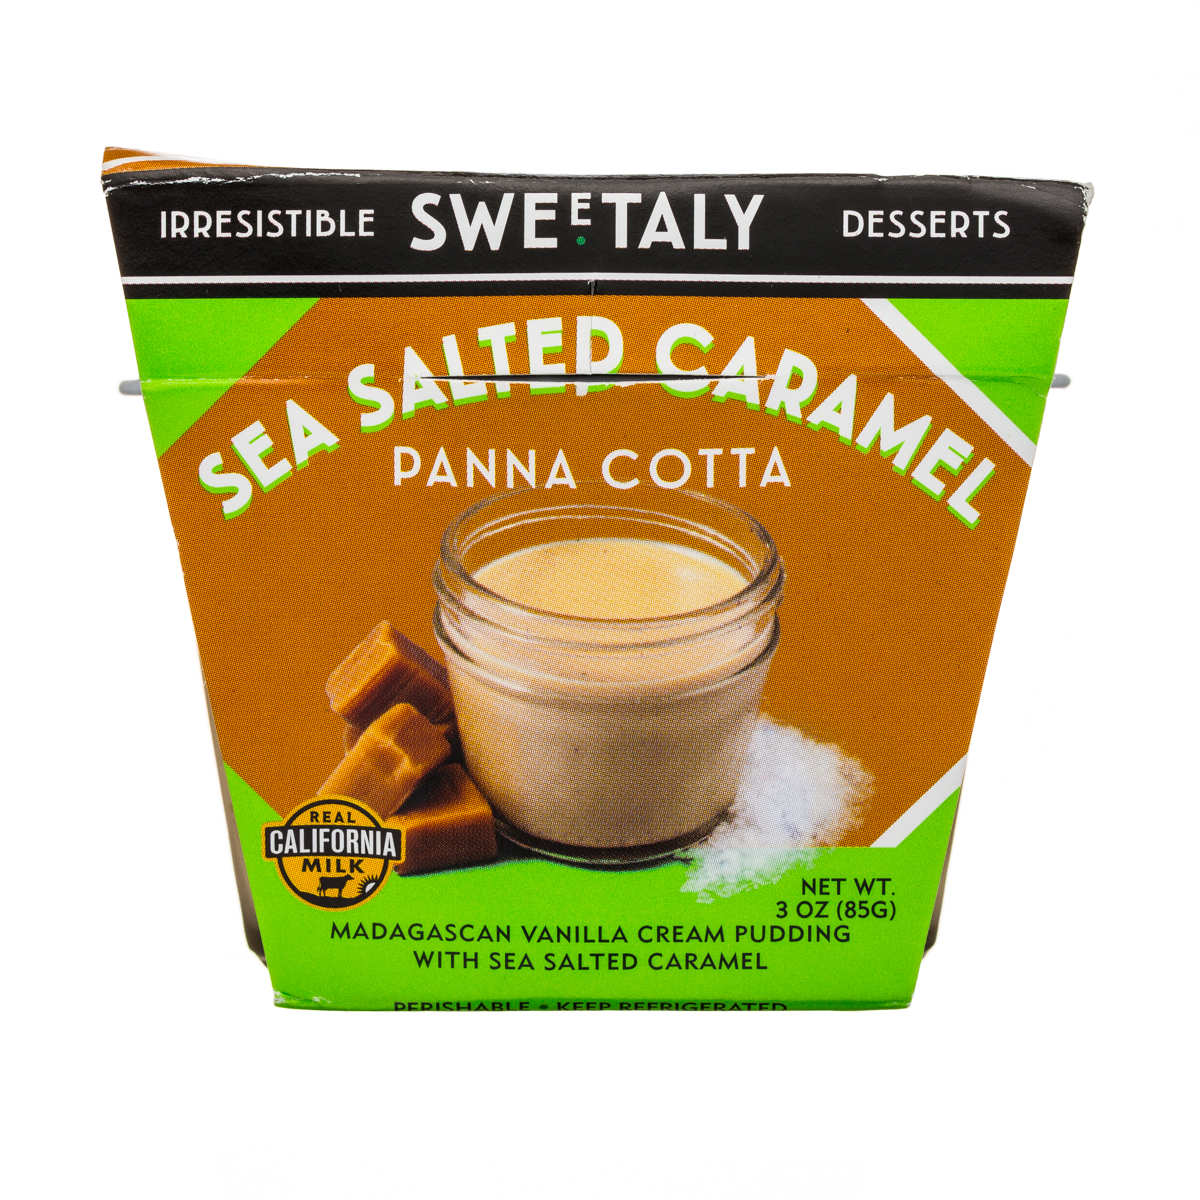 Sea Salted Caramel Panna Cotta